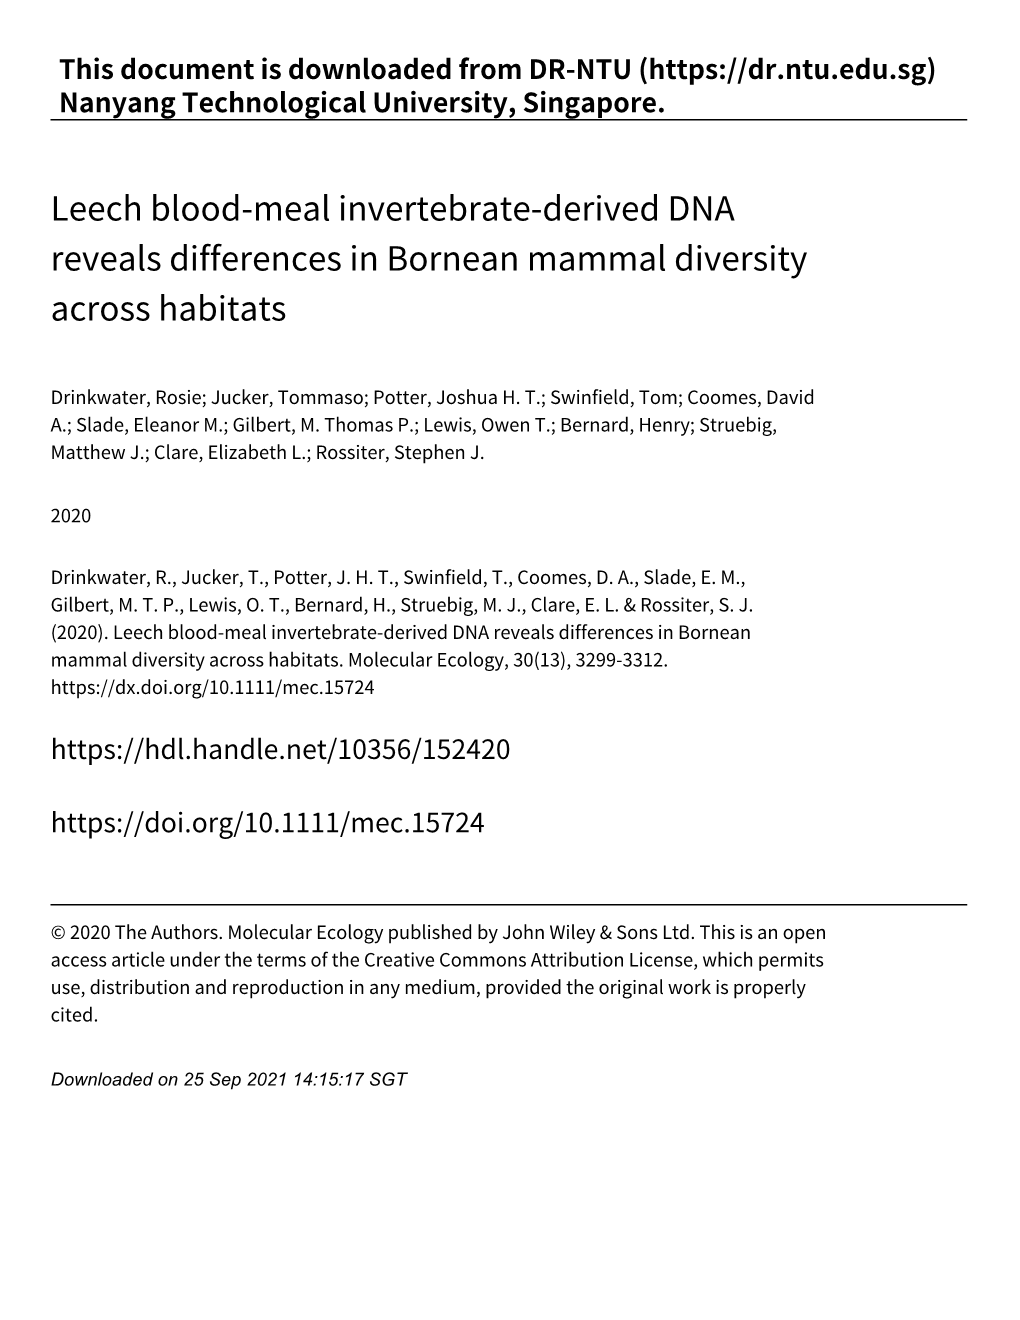 Leech Blood‑Meal Invertebrate‑Derived DNA Reveals Differences in Bornean Mammal Diversity Across Habitats